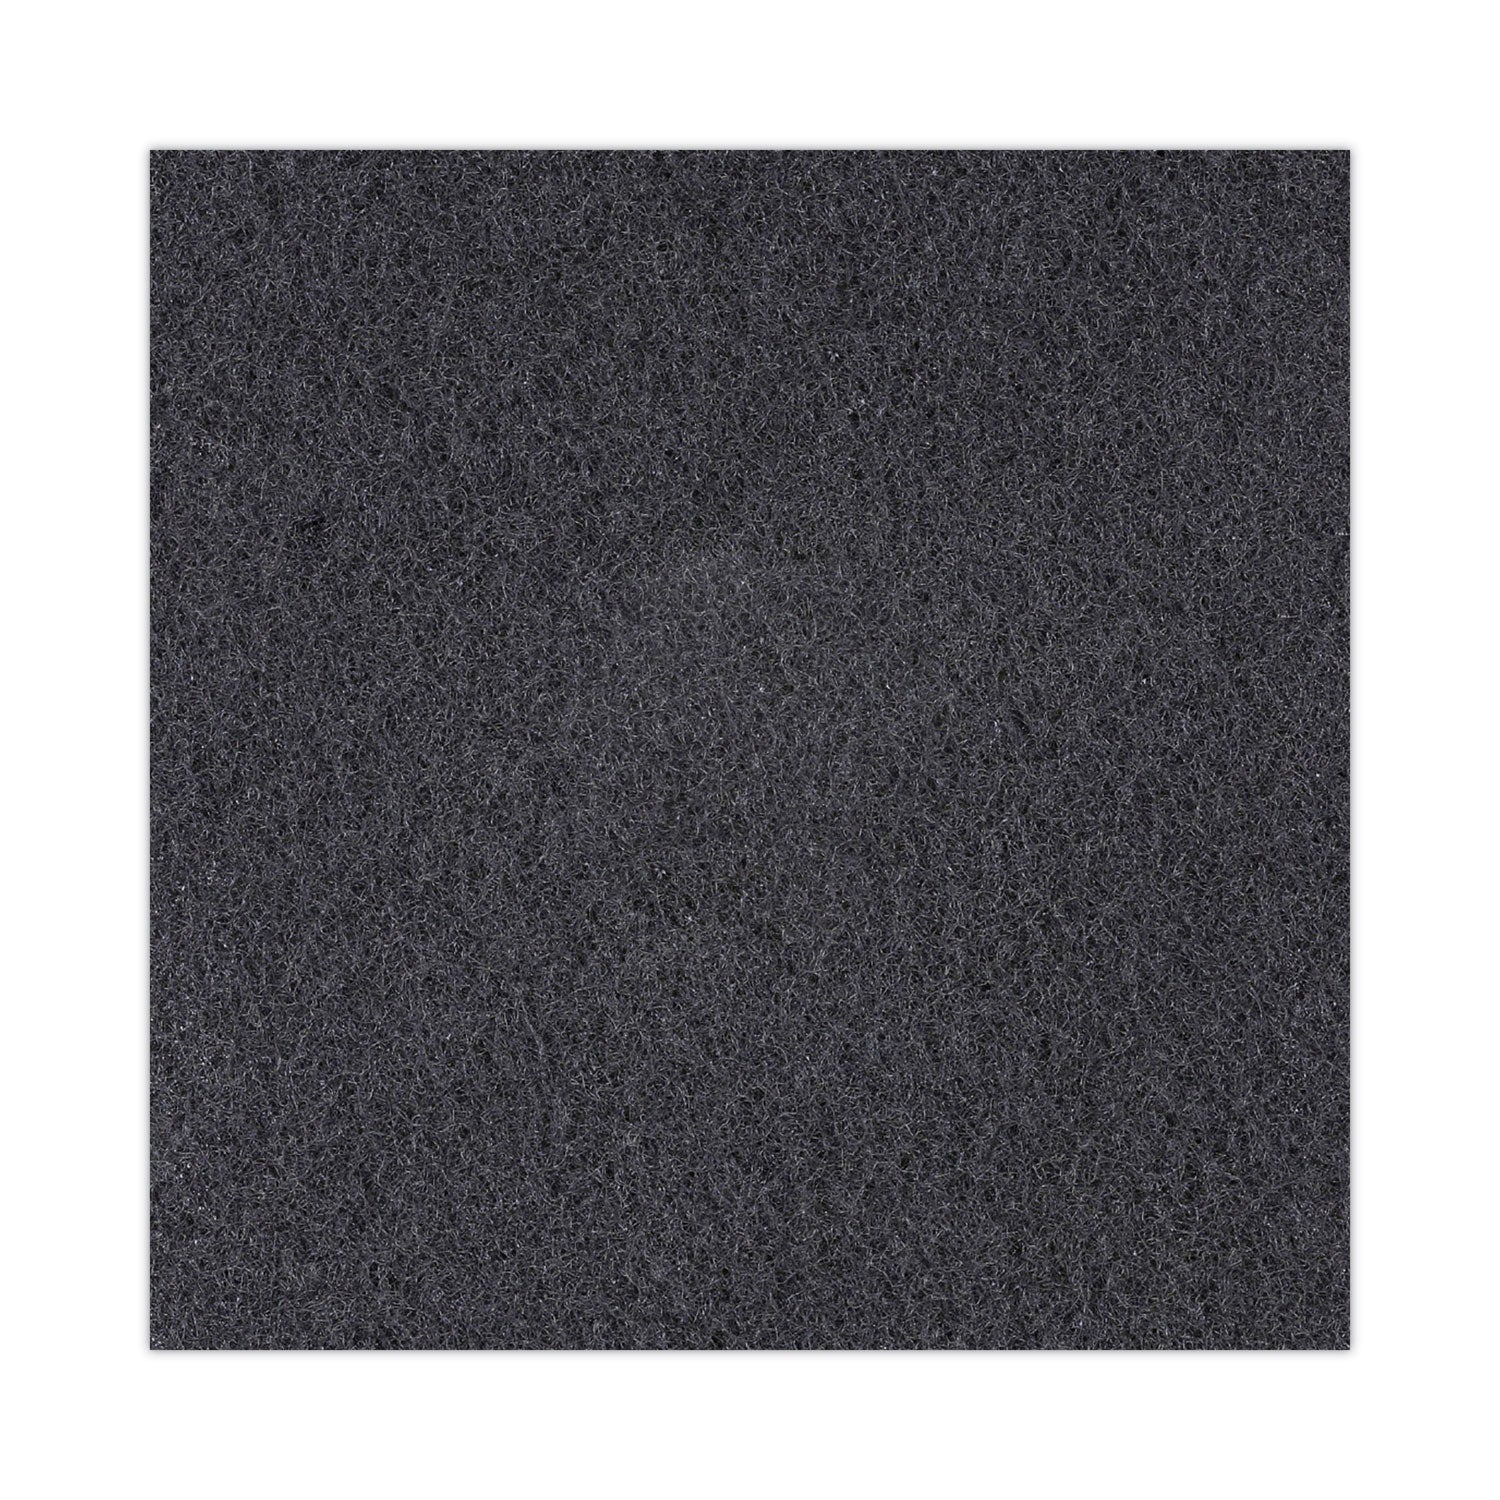 high-performance-stripping-floor-pads-17-diameter-black-5-carton_bwk4017hip - 6